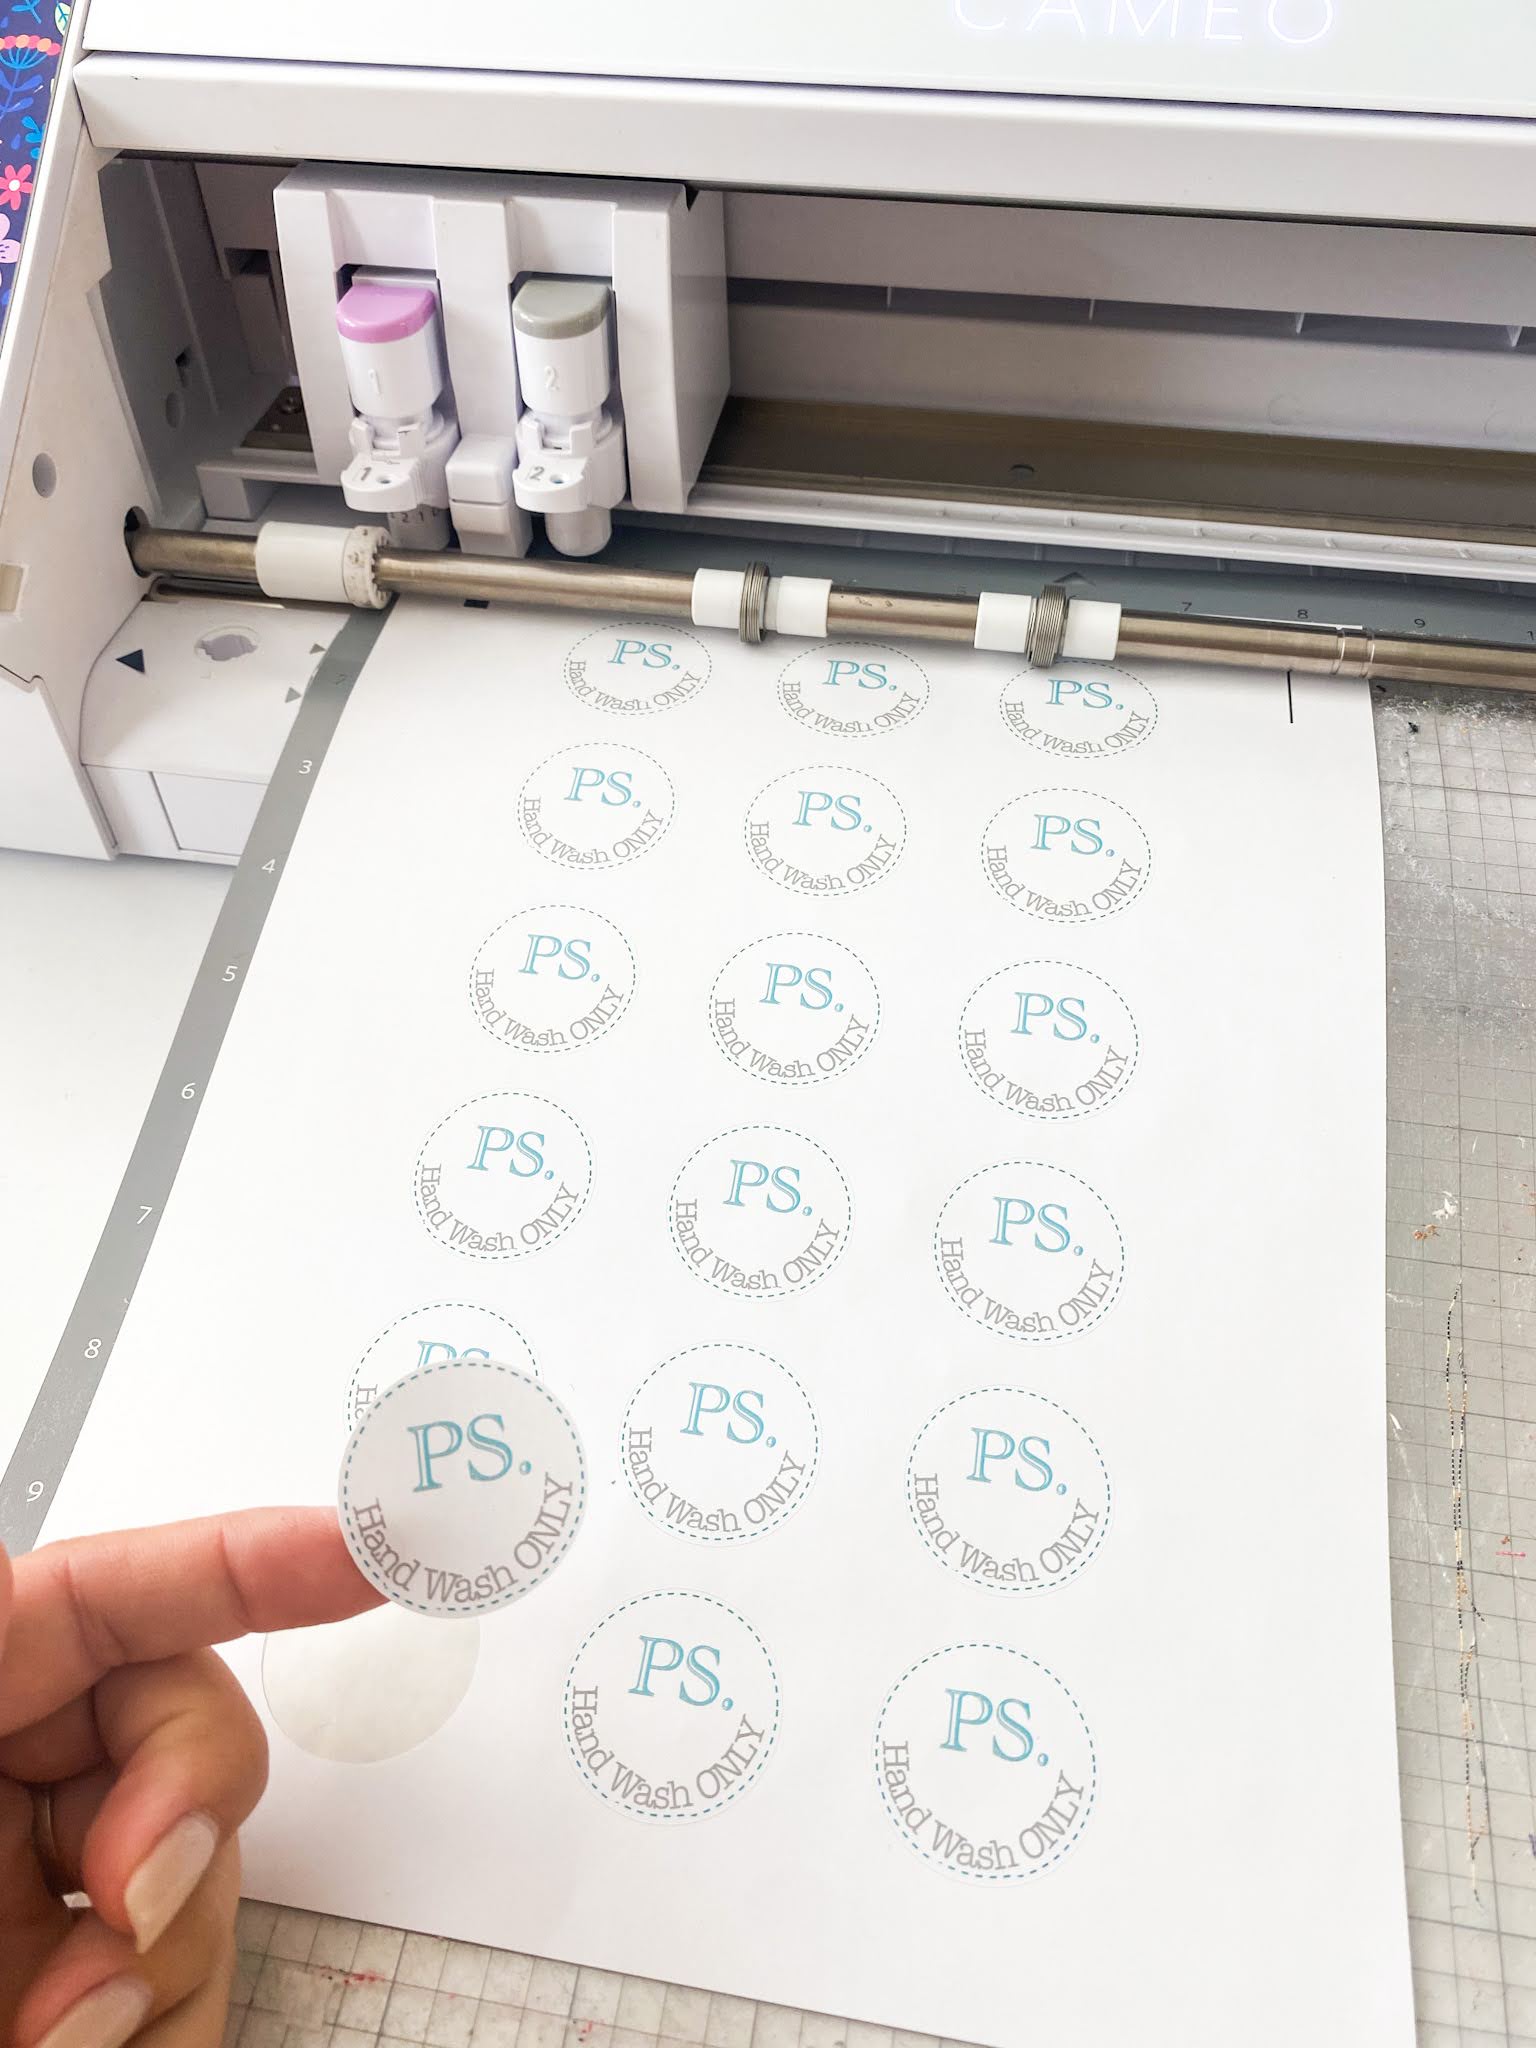 Sticker Paper Vs Printable Vinyl: Which Should I Use? - Silhouette School